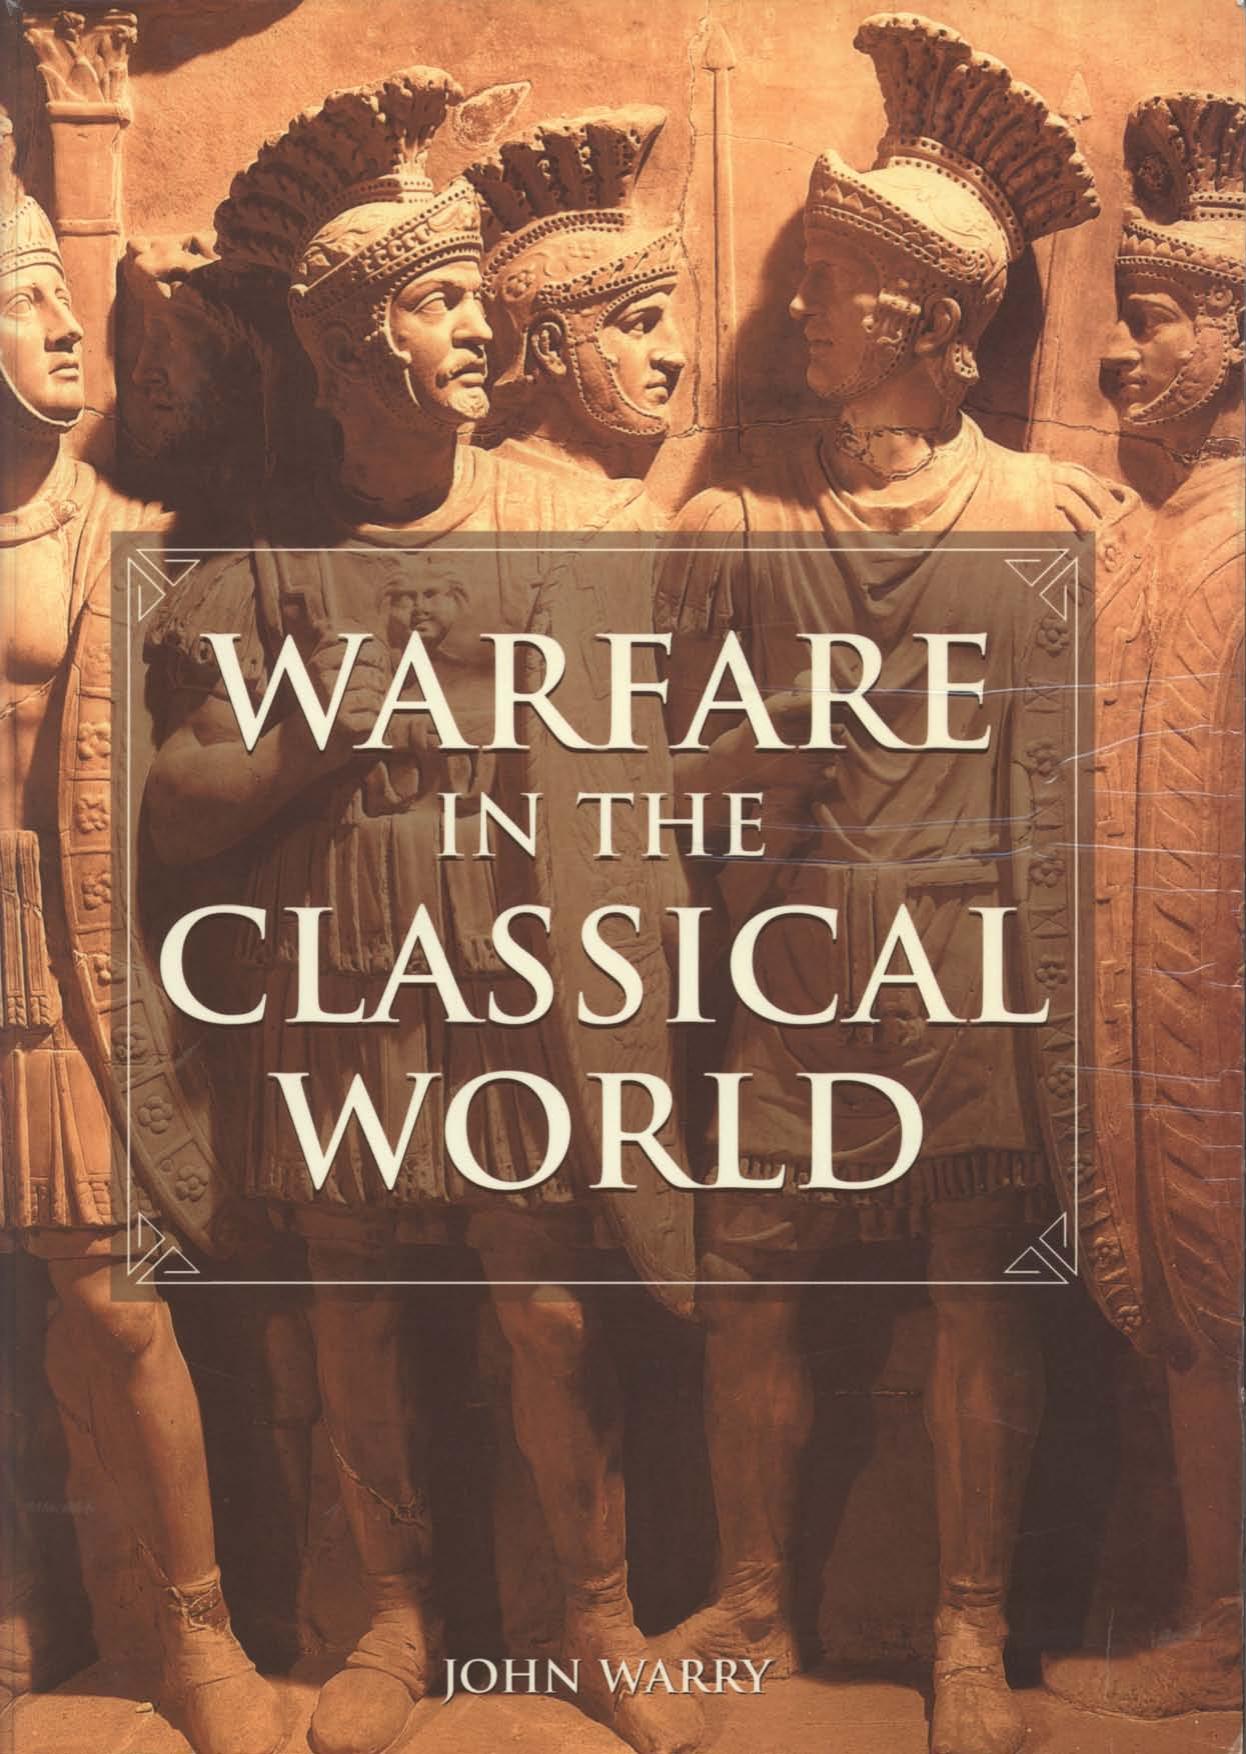 Warfare in the Classical World by John Warry